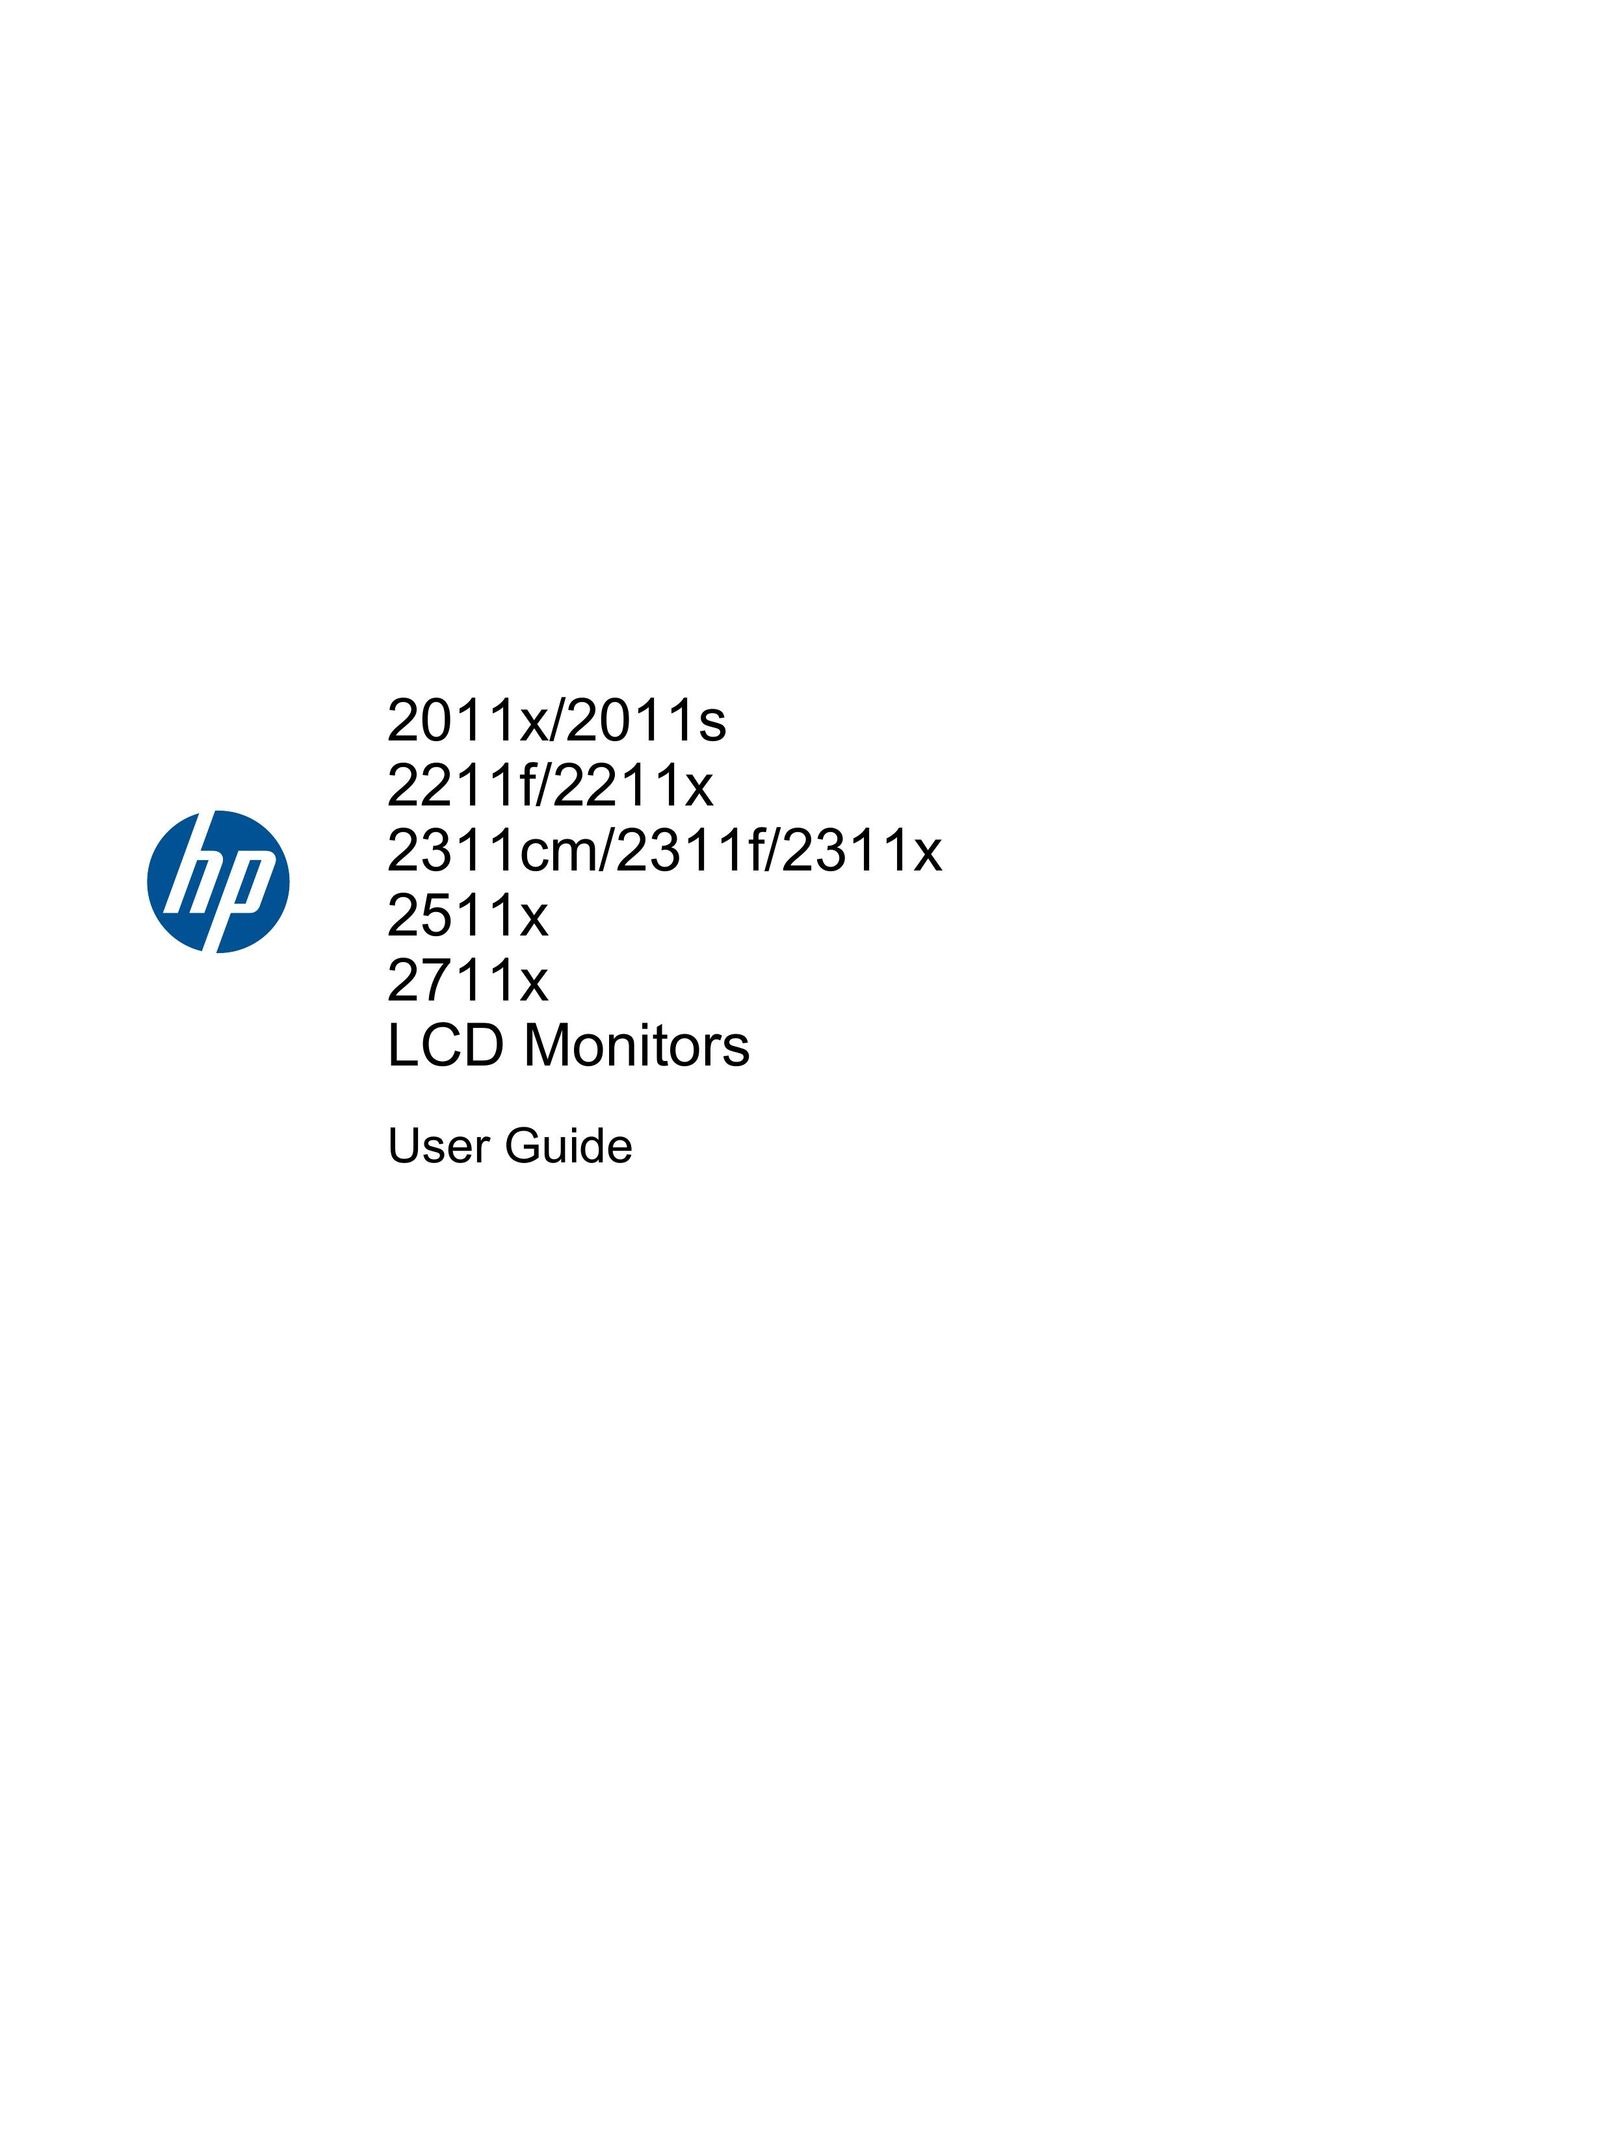 HP (Hewlett-Packard) 2511x Car Video System User Manual (Page 1)